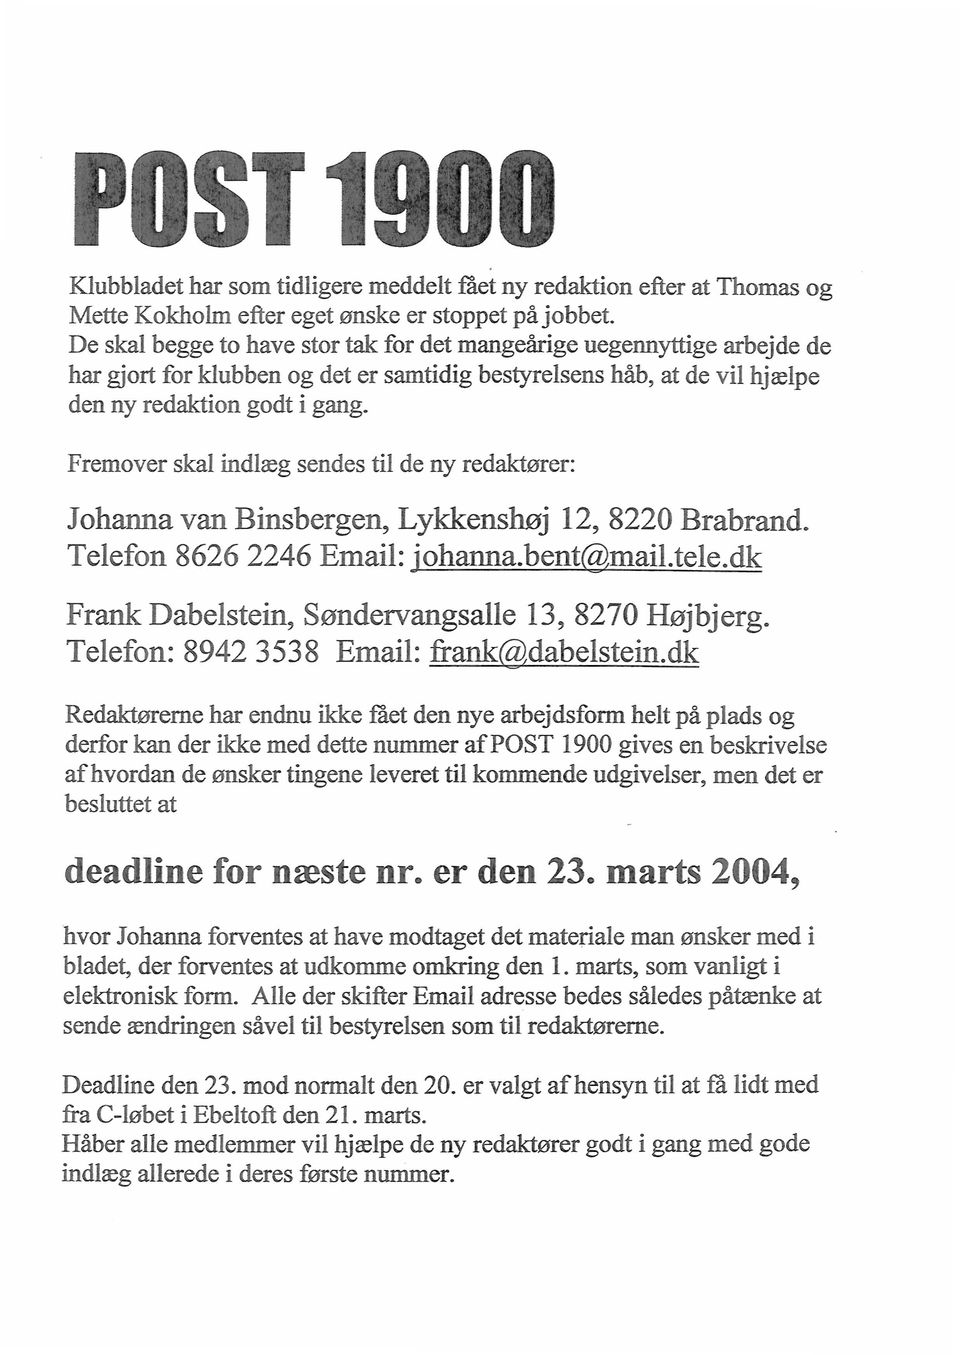 Fremover skal indlæg sendes til de ny redaktører: Johanna van Binsbergen, Lykkenshøj 12, 8220 Brabrand. Telefon 8626 2246 Email: johanna.bent@mail.tele.